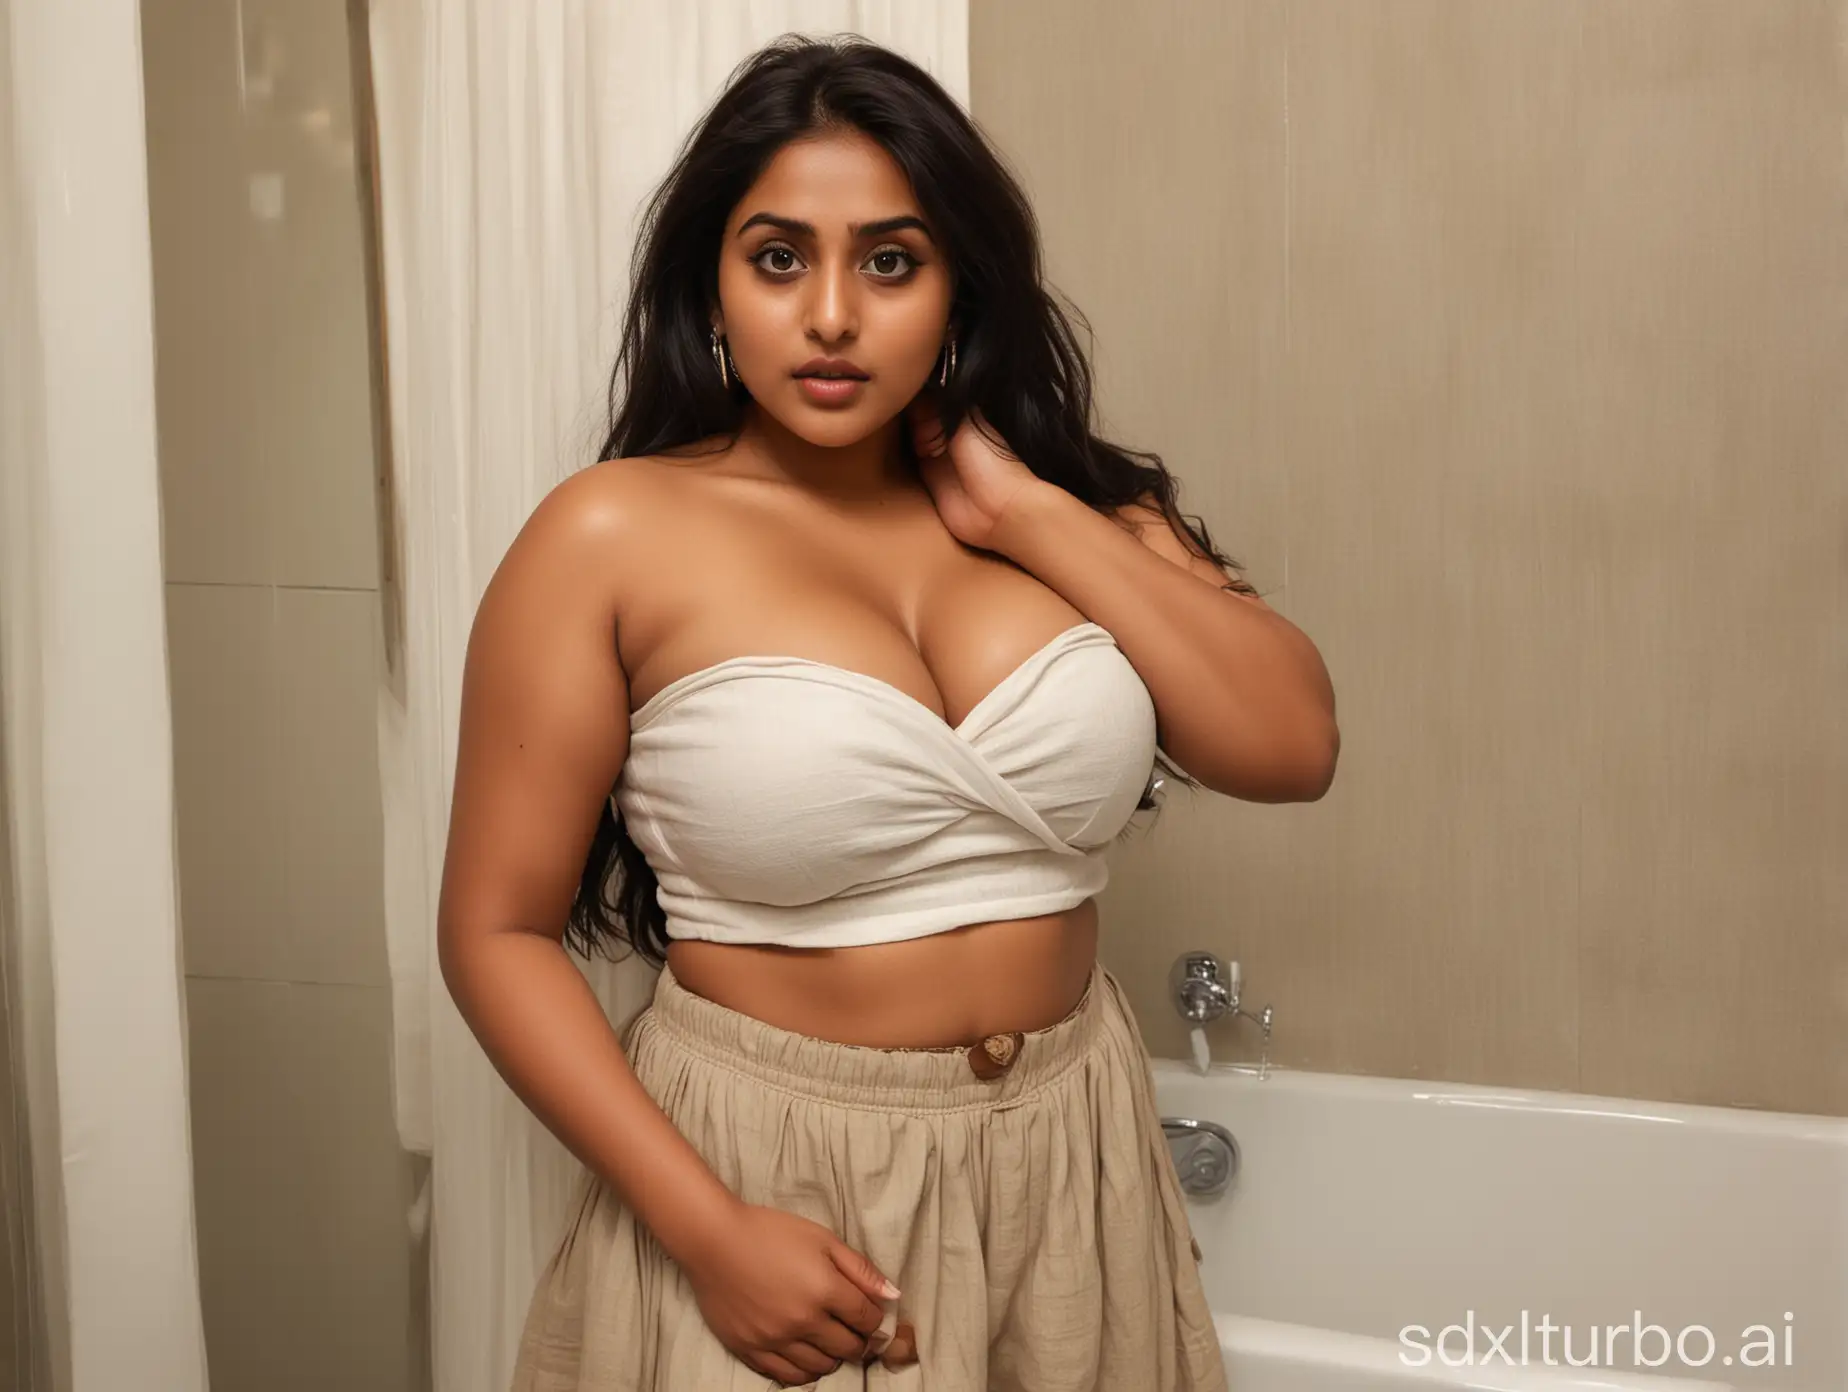 Curvy-Indian-Woman-Embracing-Family-Members-in-Bathroom